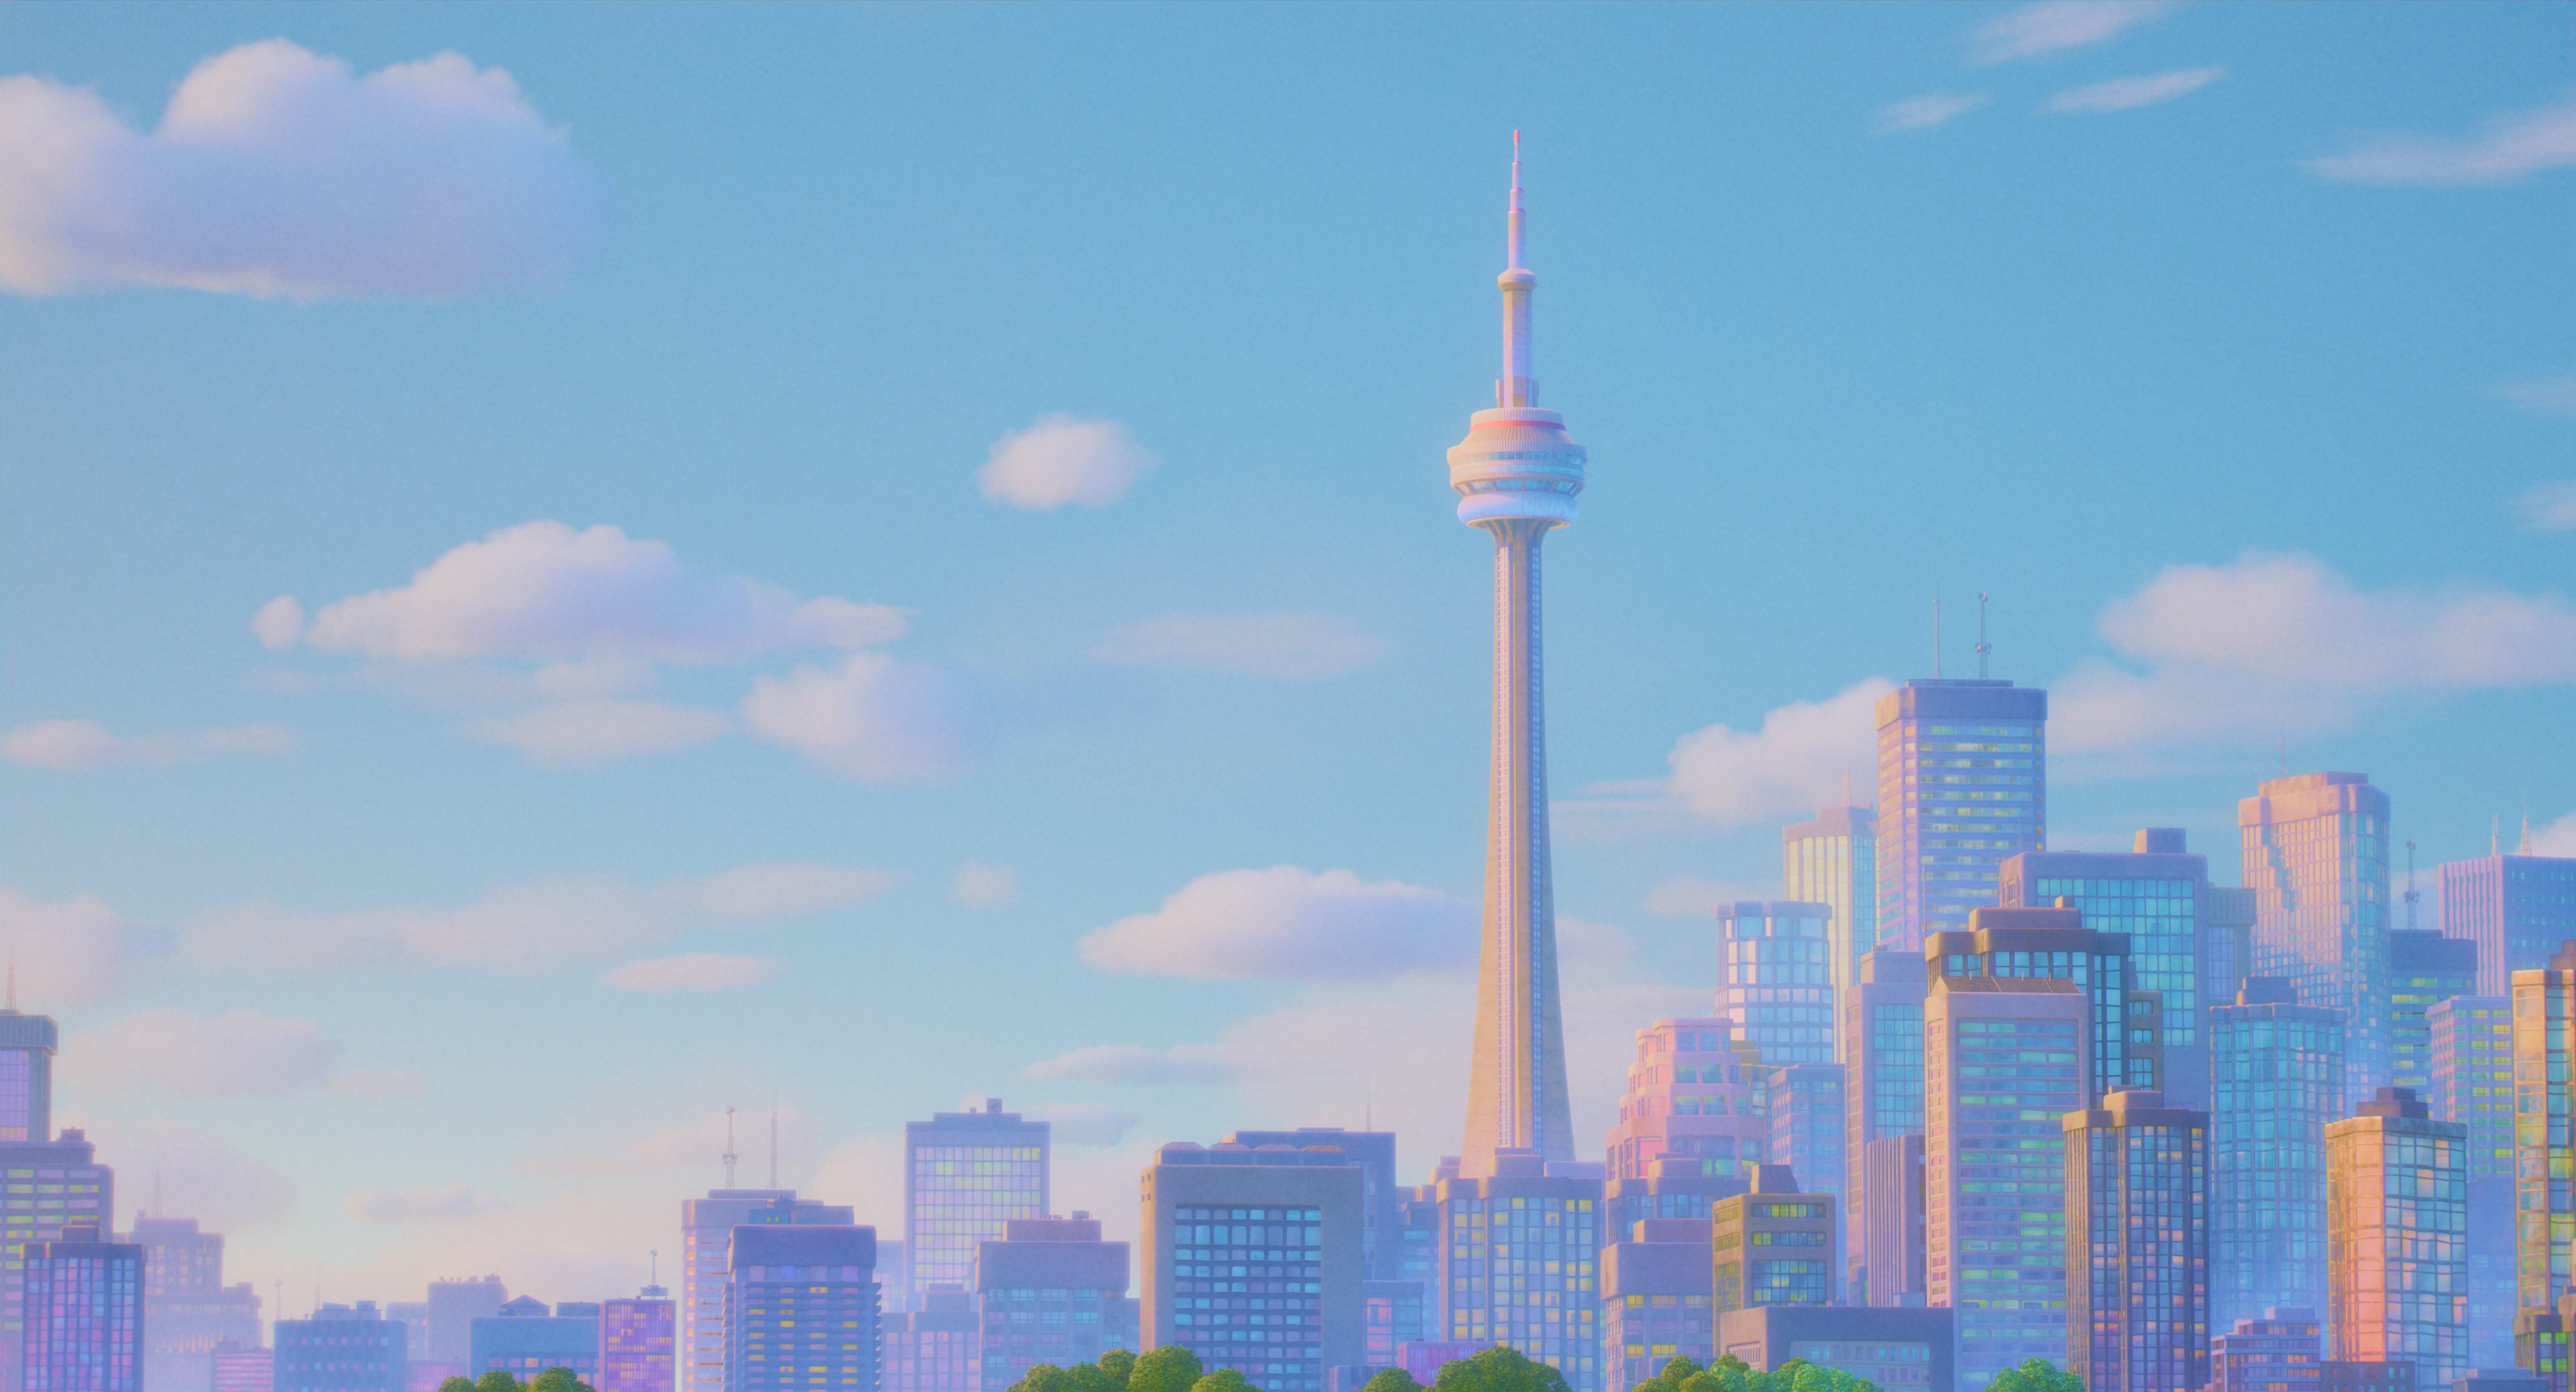 Toronto Canada CN Tower Turning Red Cityscape Digital Art 3835x2073